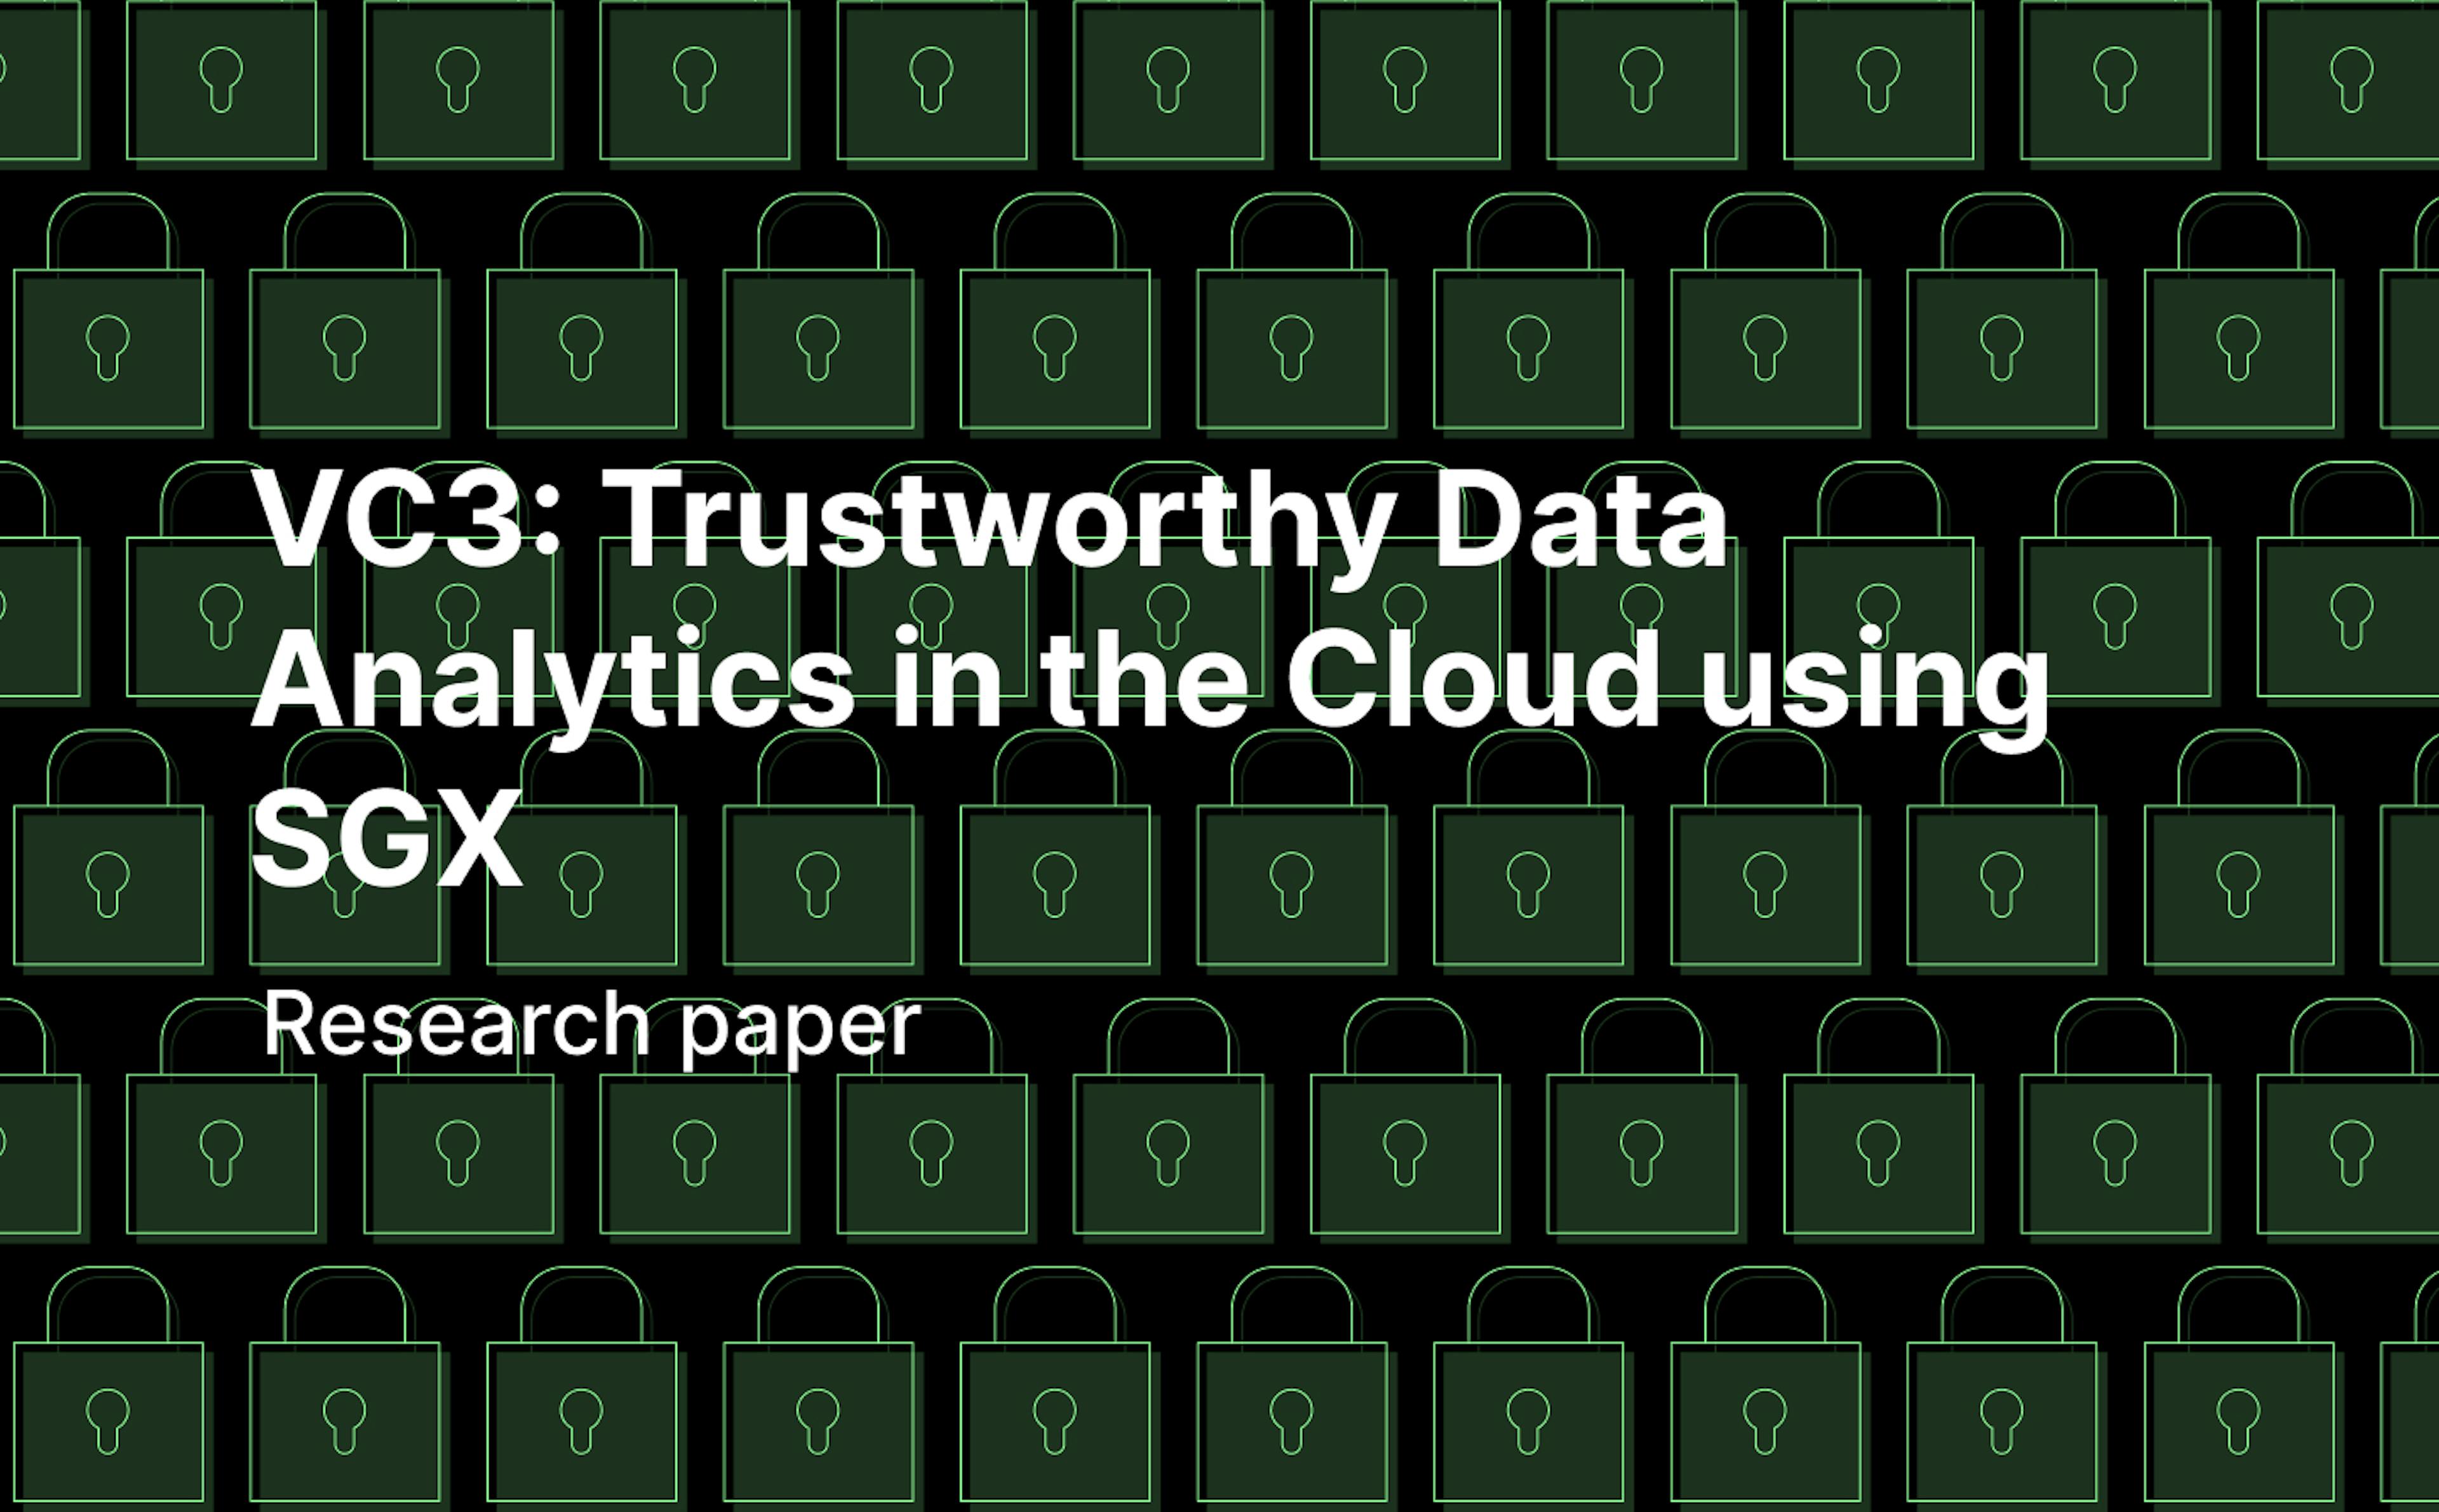 VC3: Trustworthy data analytics in the cloud using SGX